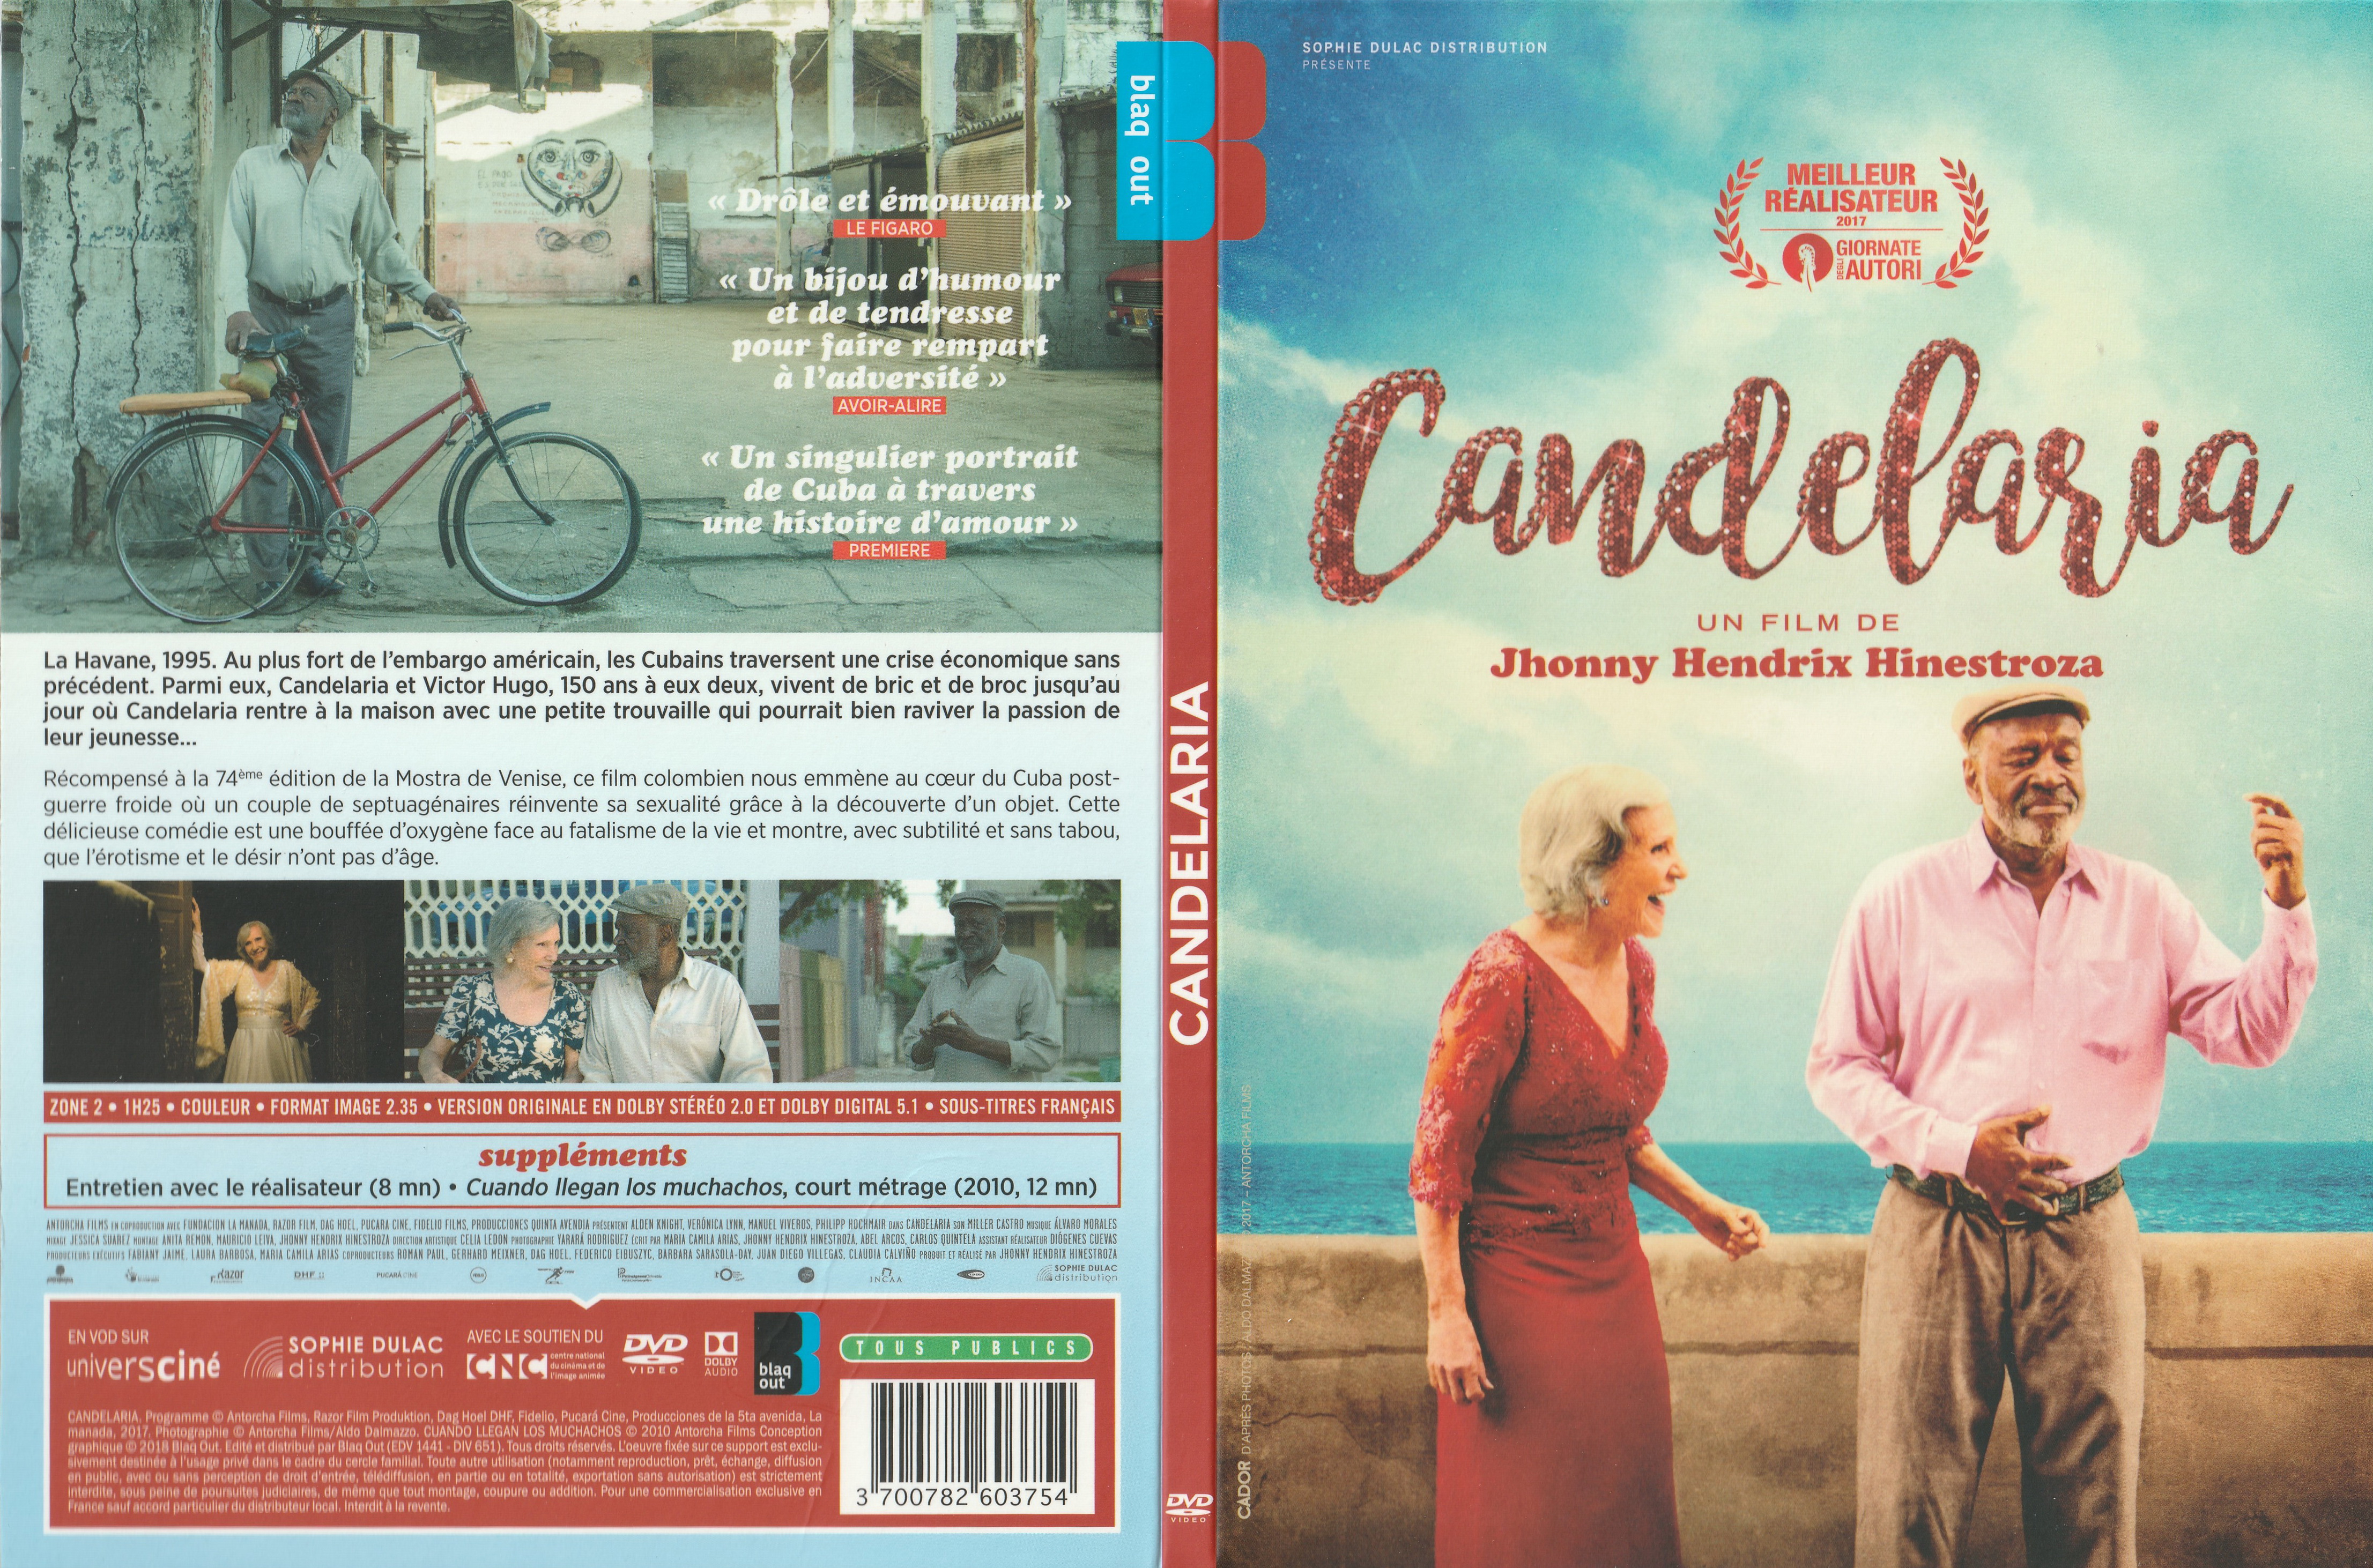 Jaquette DVD Candelaria